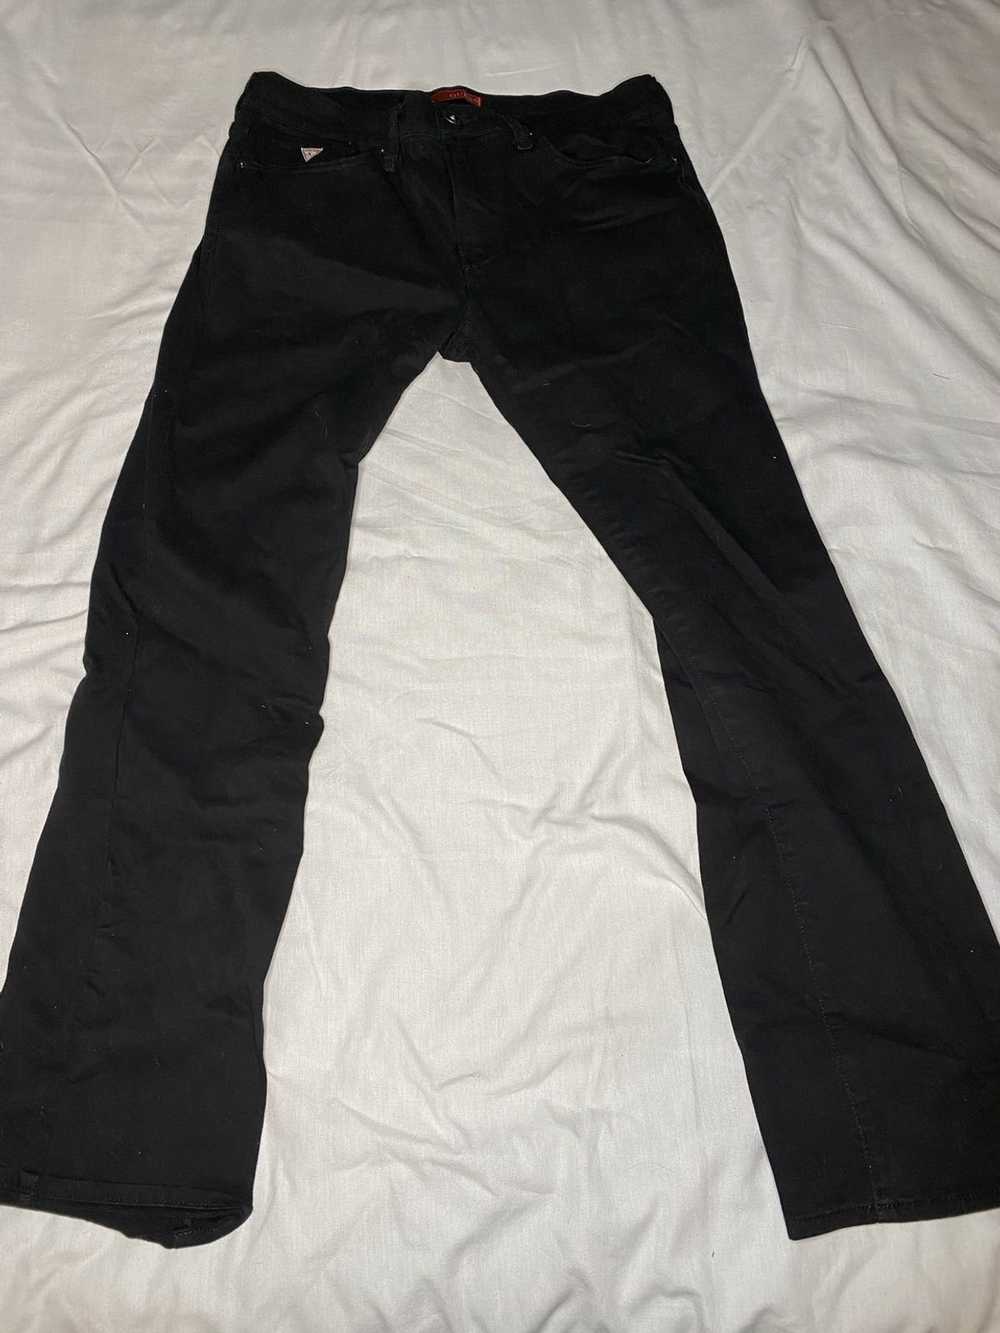 Guess Guess Black Denim Jeans - image 2